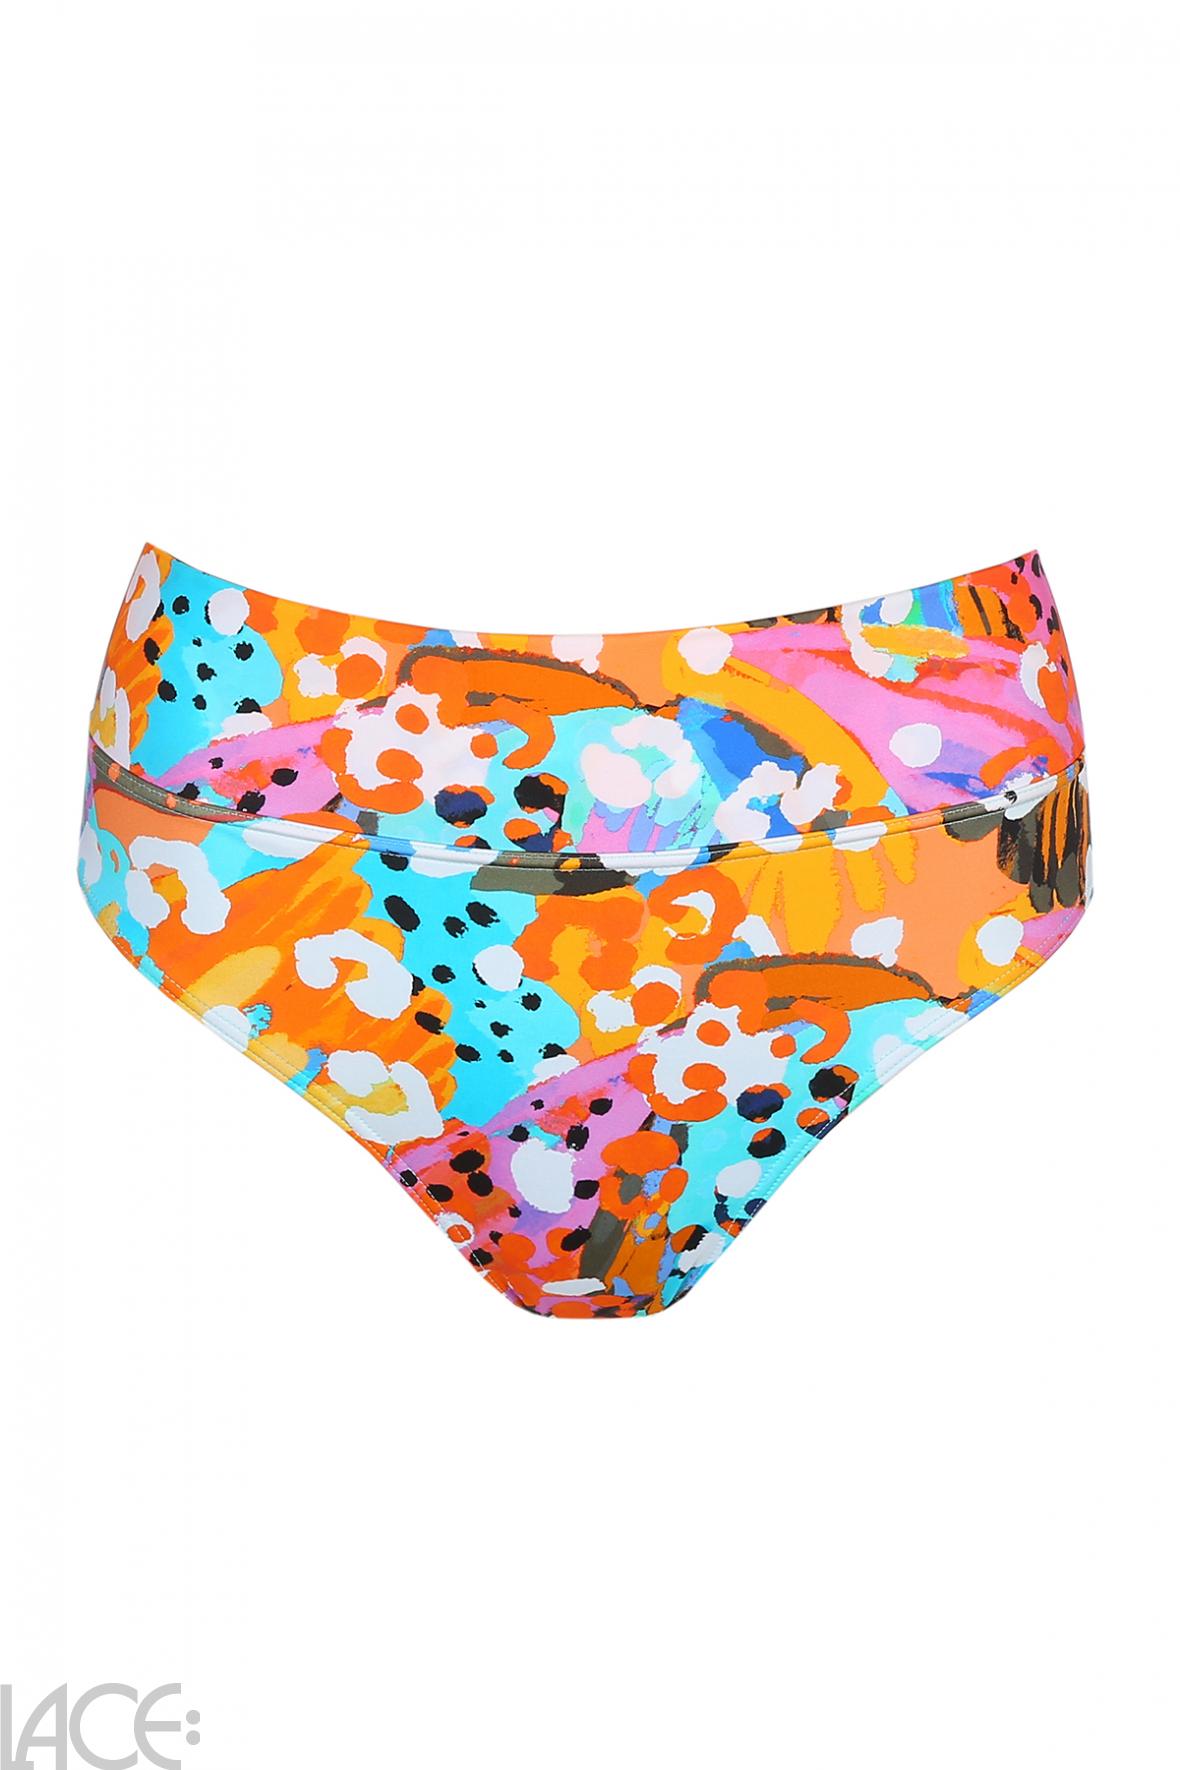 PrimaDonna Swim Caribe Bikini Folded brief – Lace-Lingerie.com